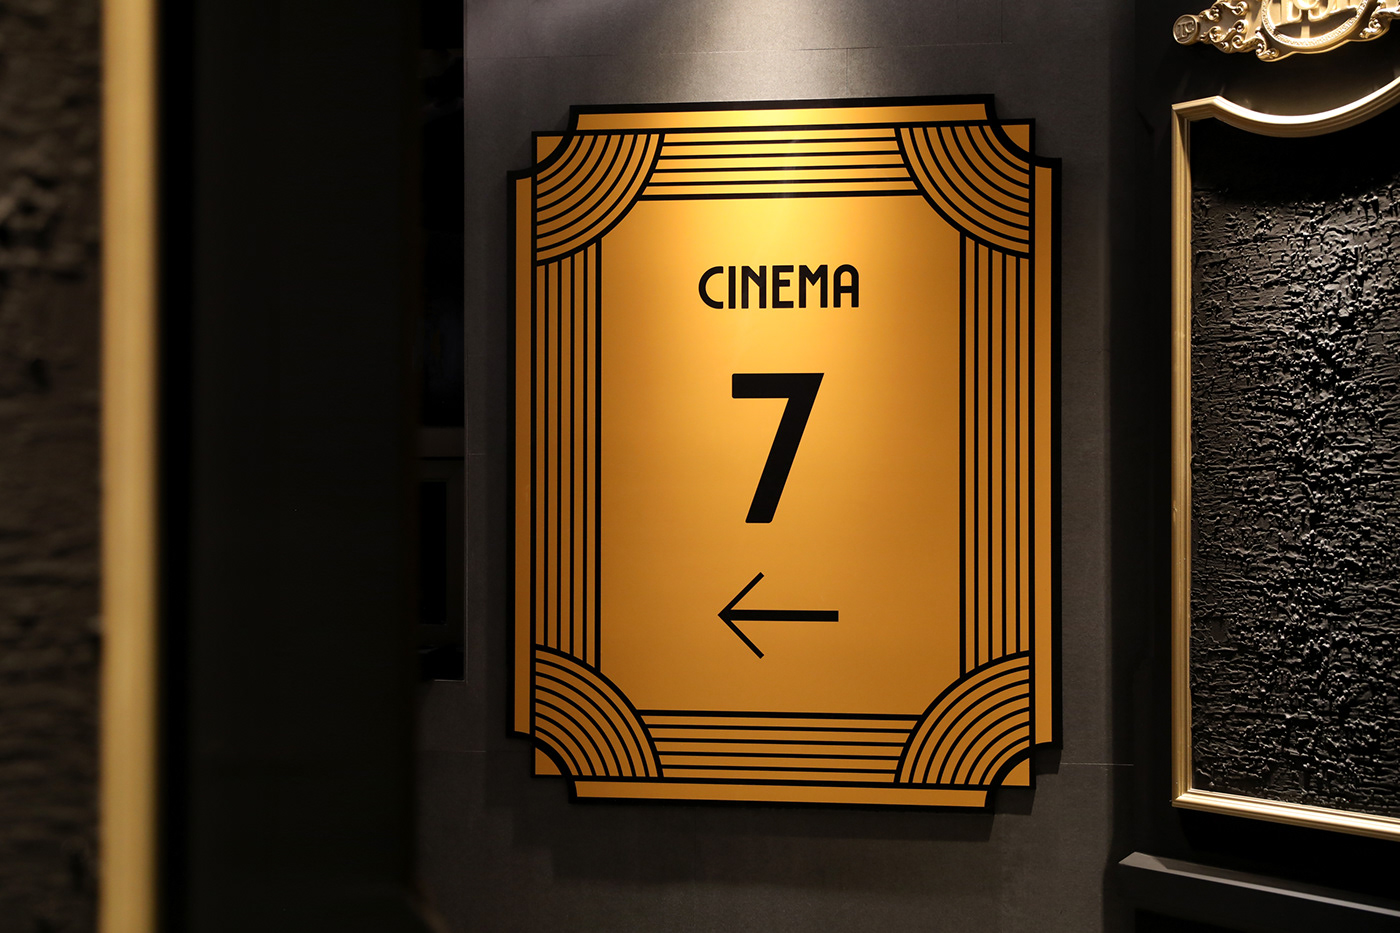 branding  Cinema graphic Interior package pictogram Signage modern vintage Retro